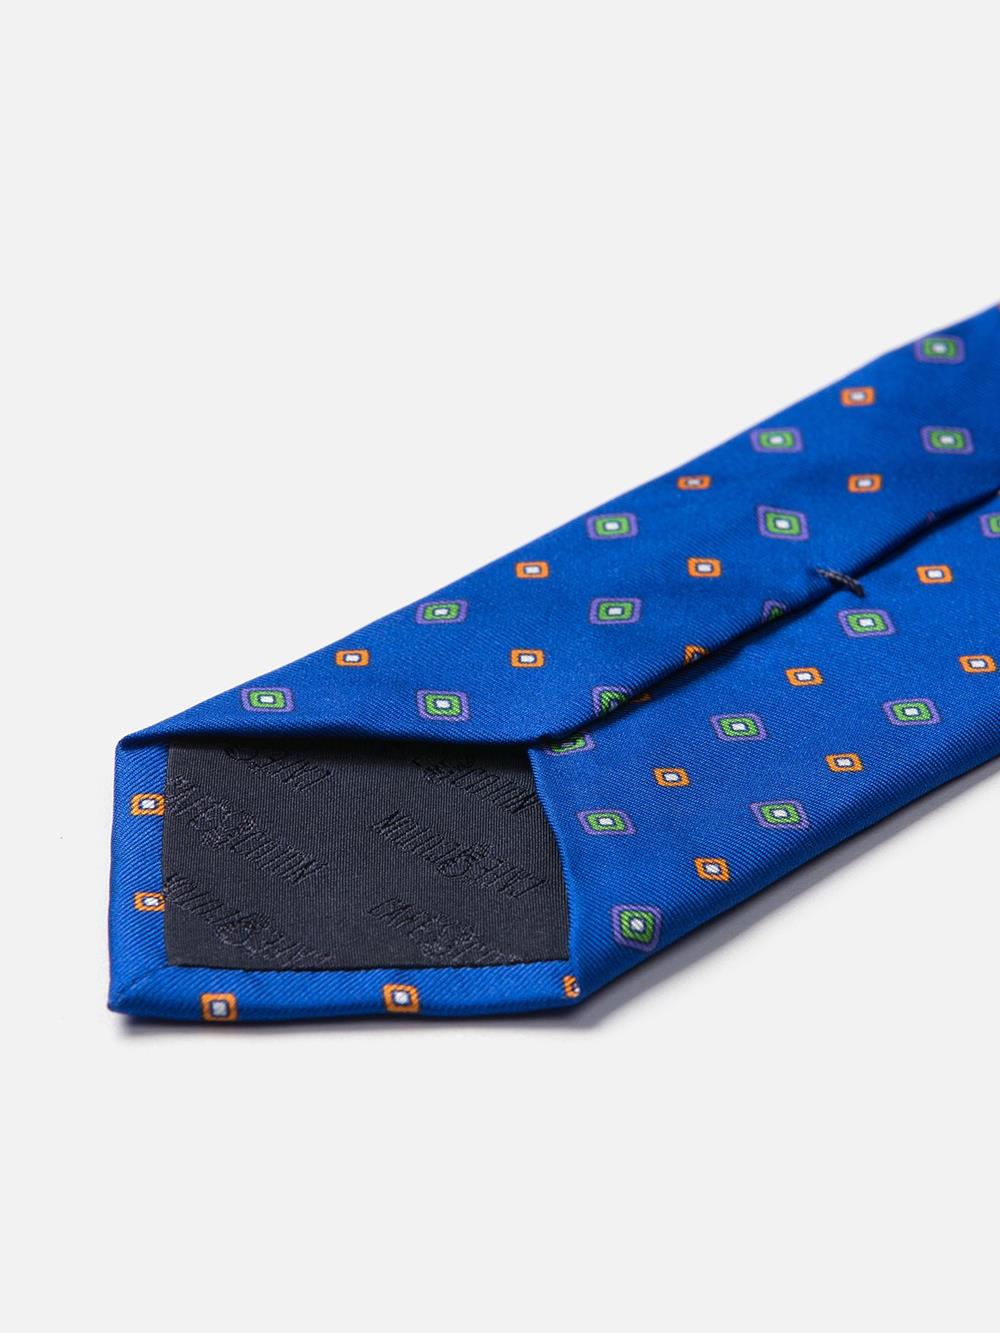 Blue silk tie with printed geometric patterns